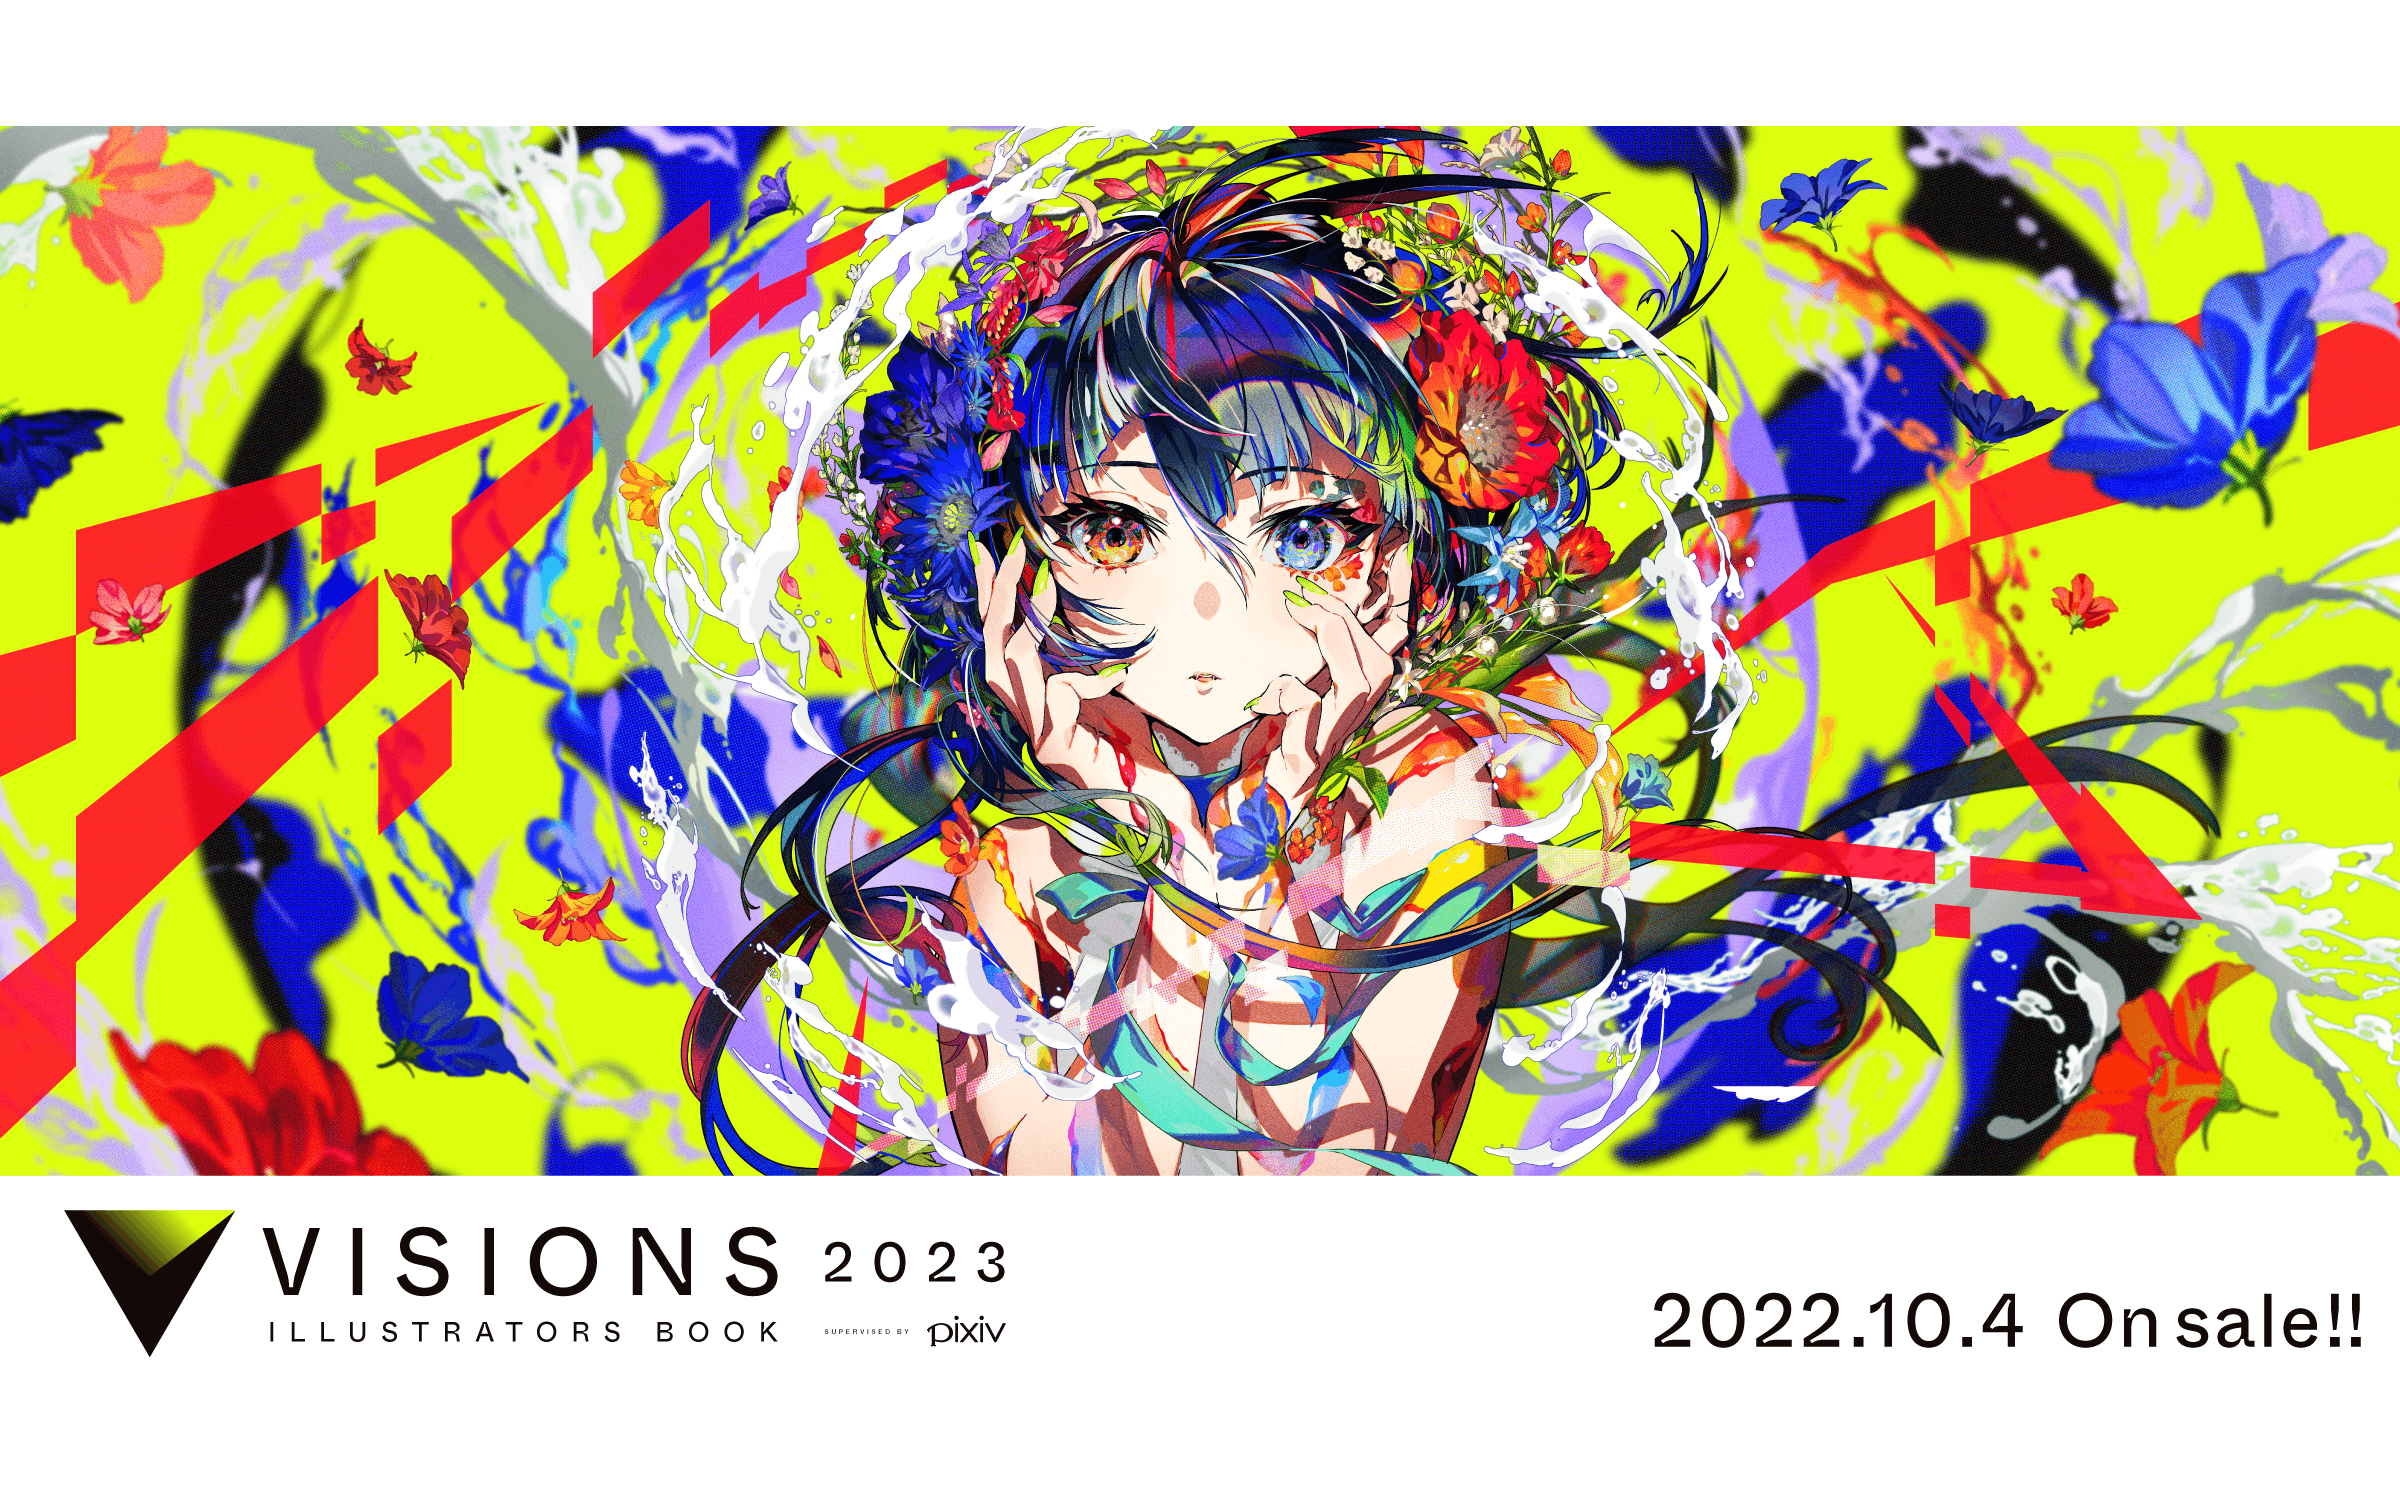 visions-2023-illustrators-book1-1